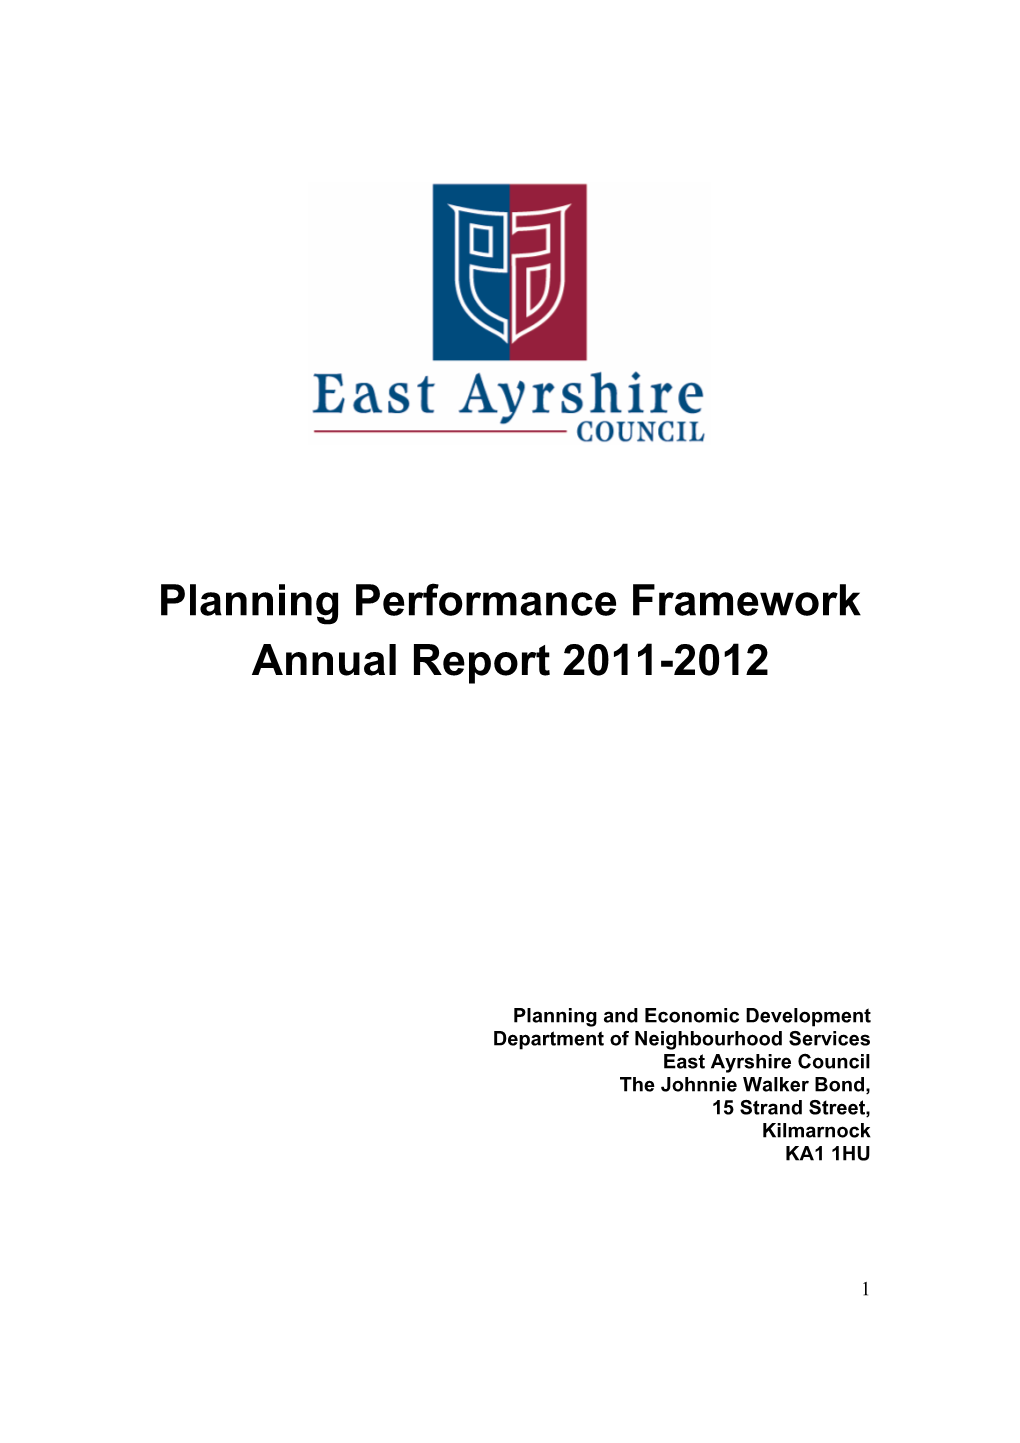 Planning Performance Framework Annual Report 2011-2012